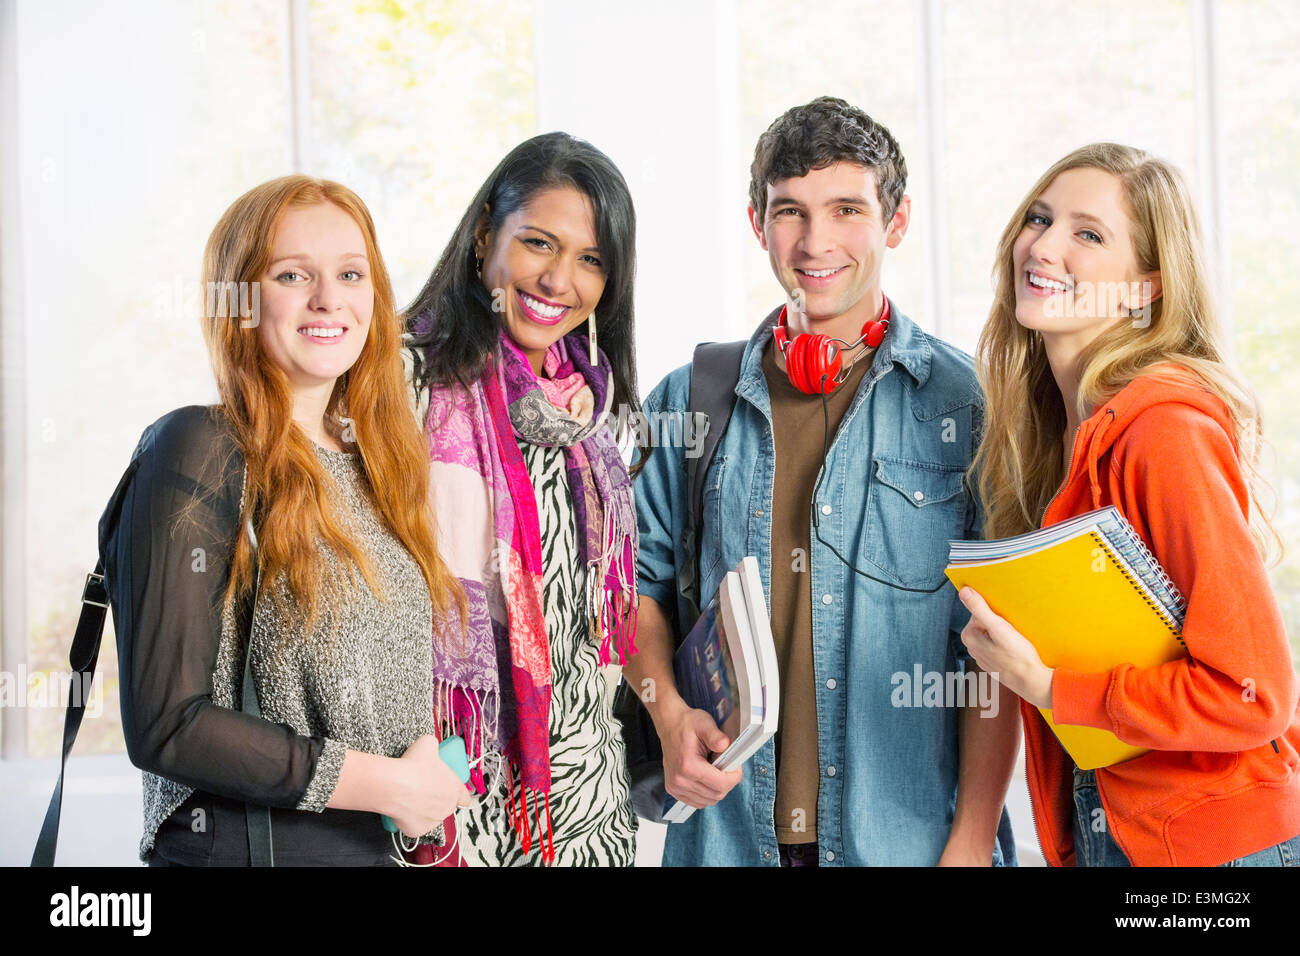 Portrait of smiling college students Banque D'Images